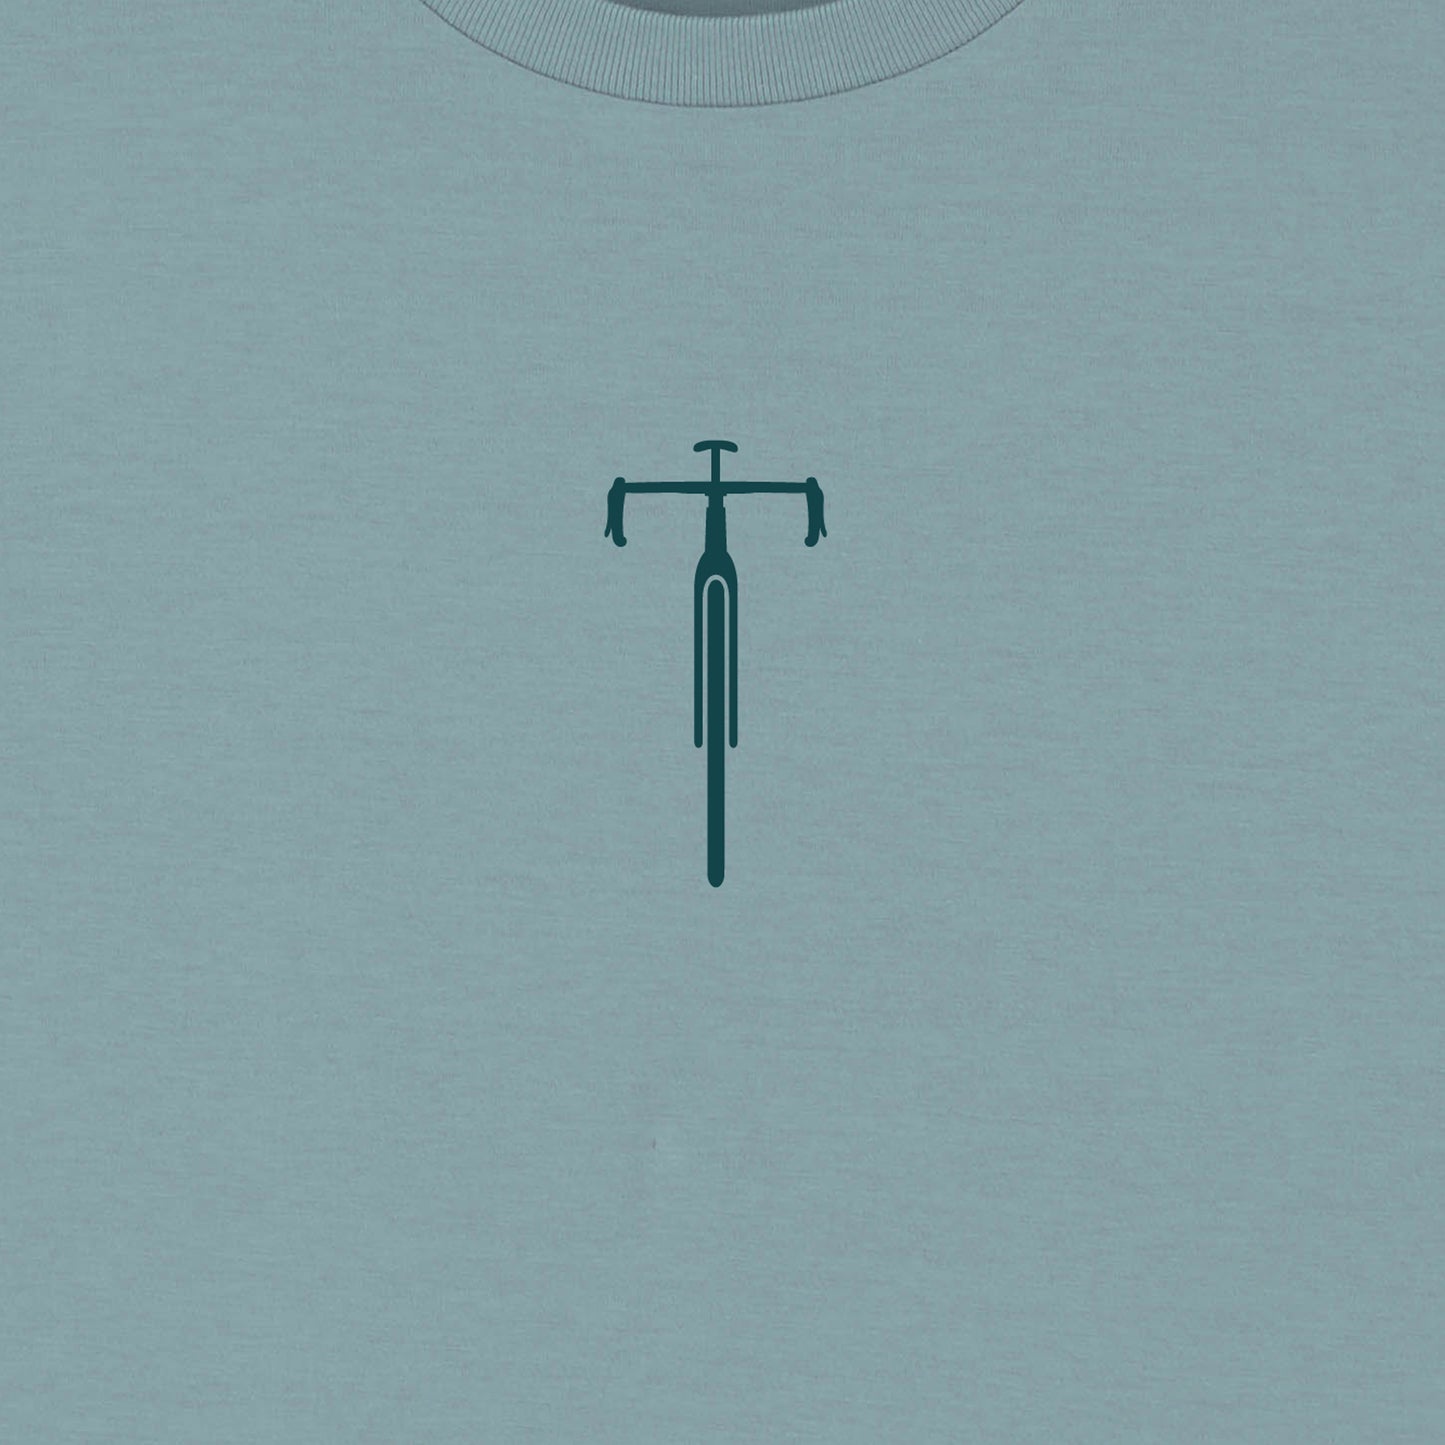 The Roadbike T-Shirt